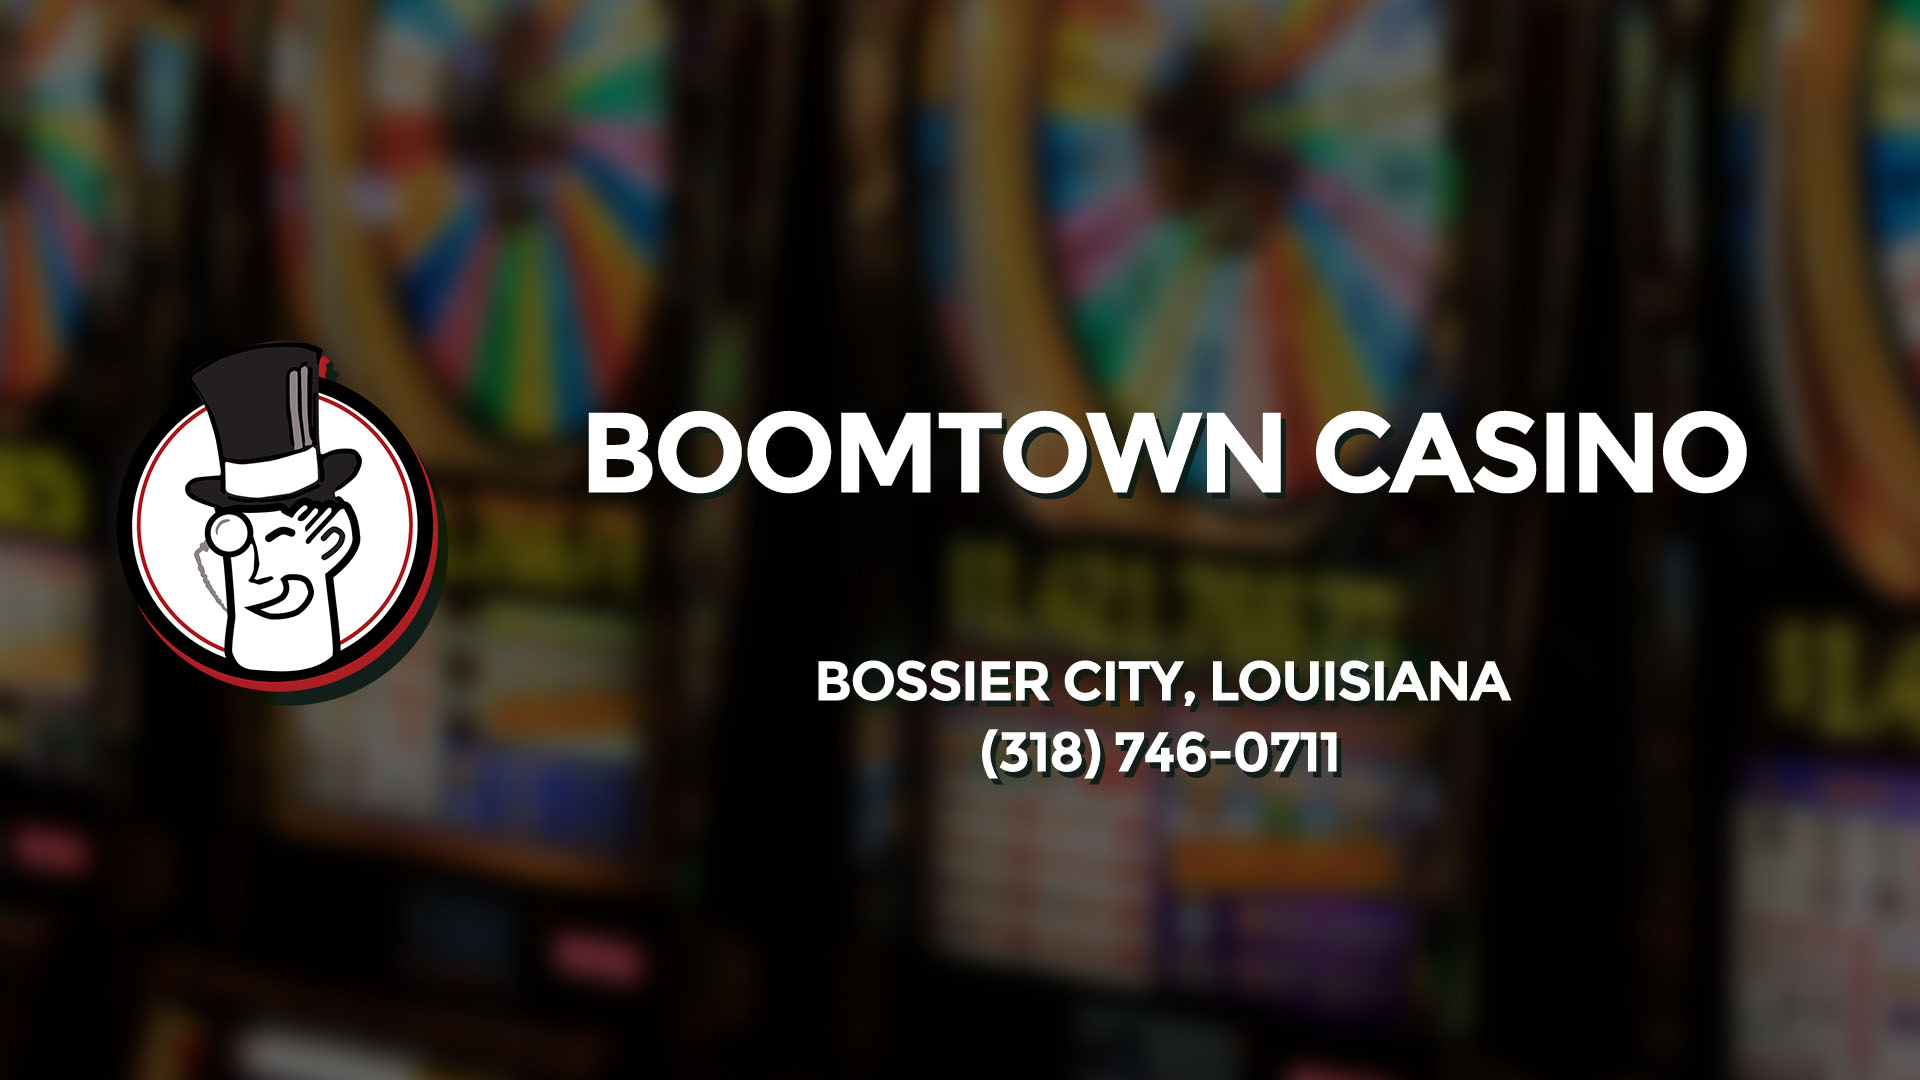 Boomtown casino bossier city buffet